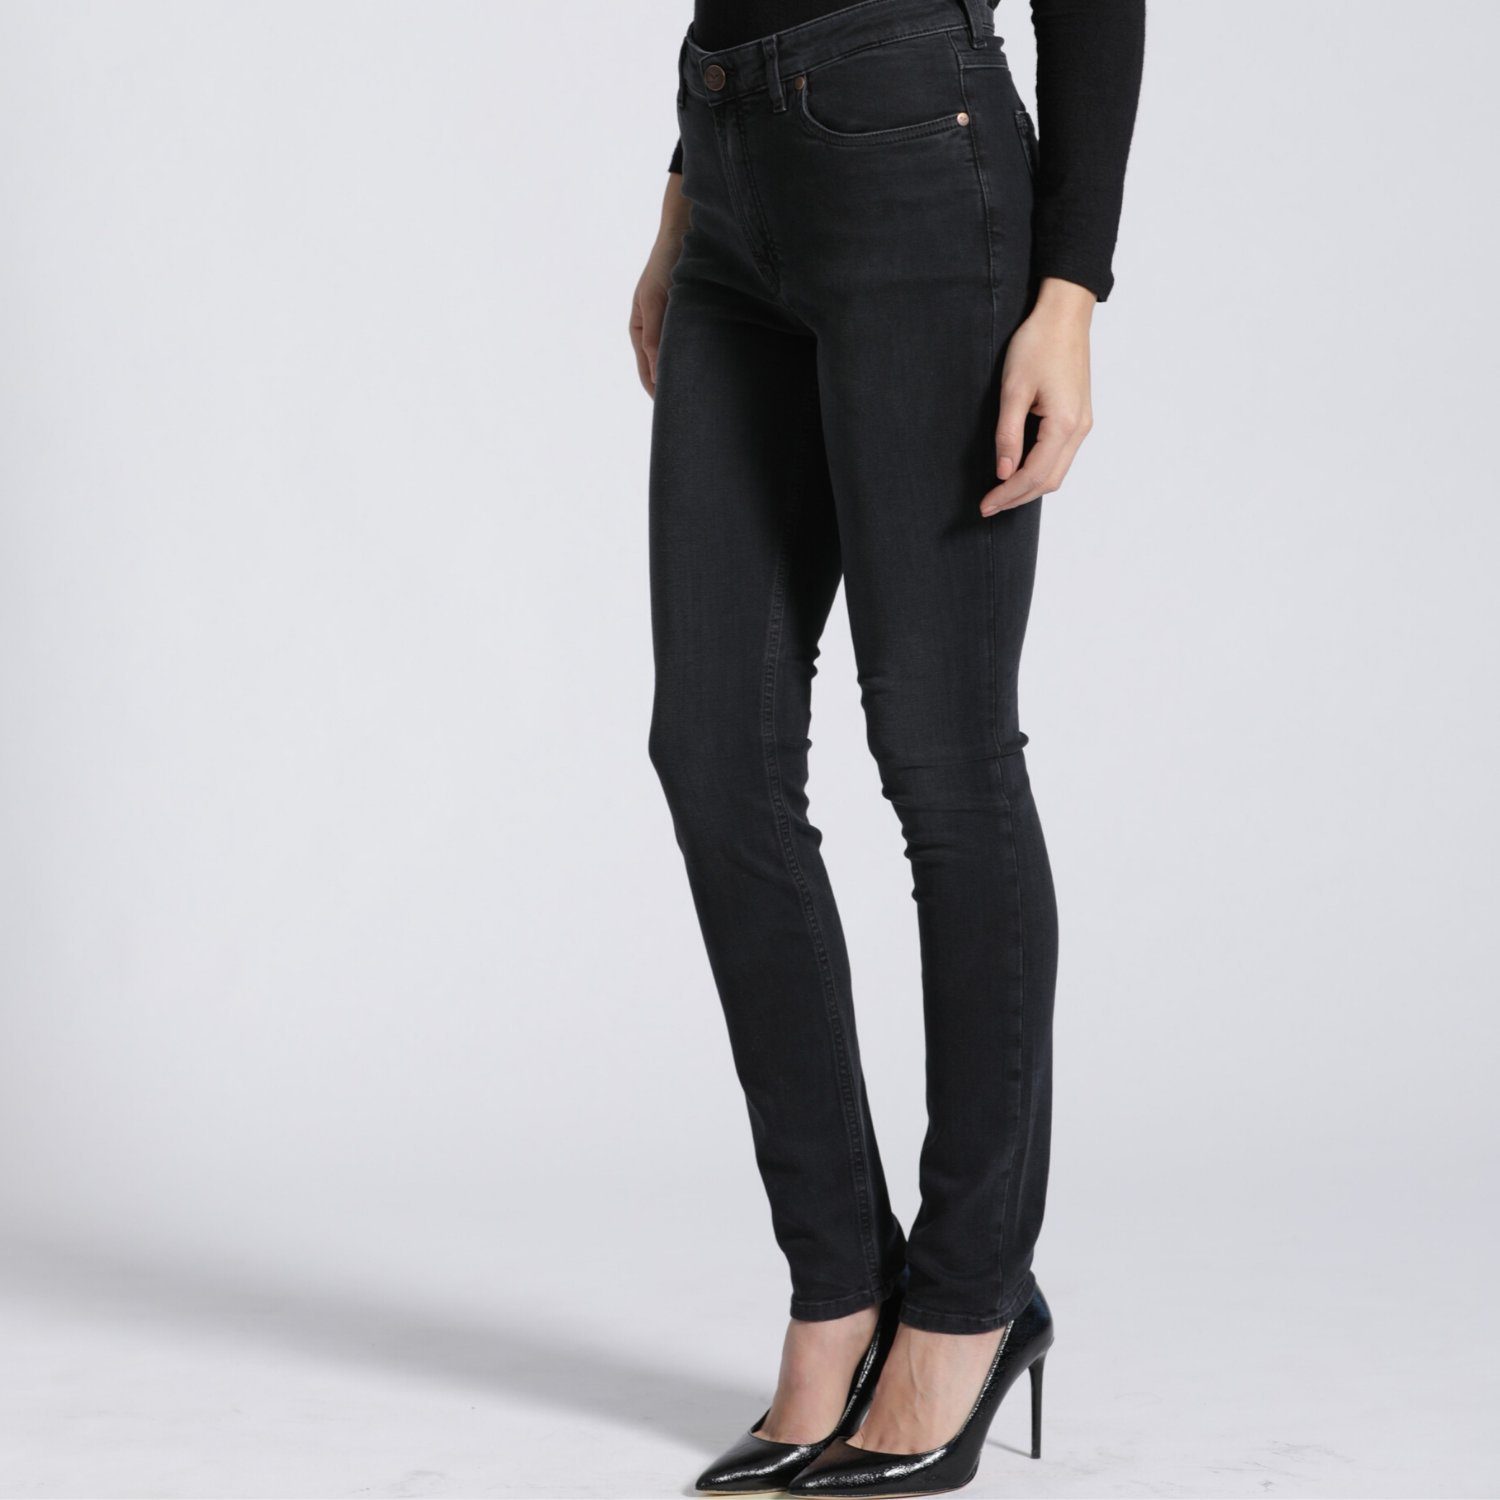 High-waist-Jeans 5-Pocket-Style, Black fv-Han:na, High Waist Hyperflex Denim, Damenjeans Raven High Waist, Skinny, Feuervogl